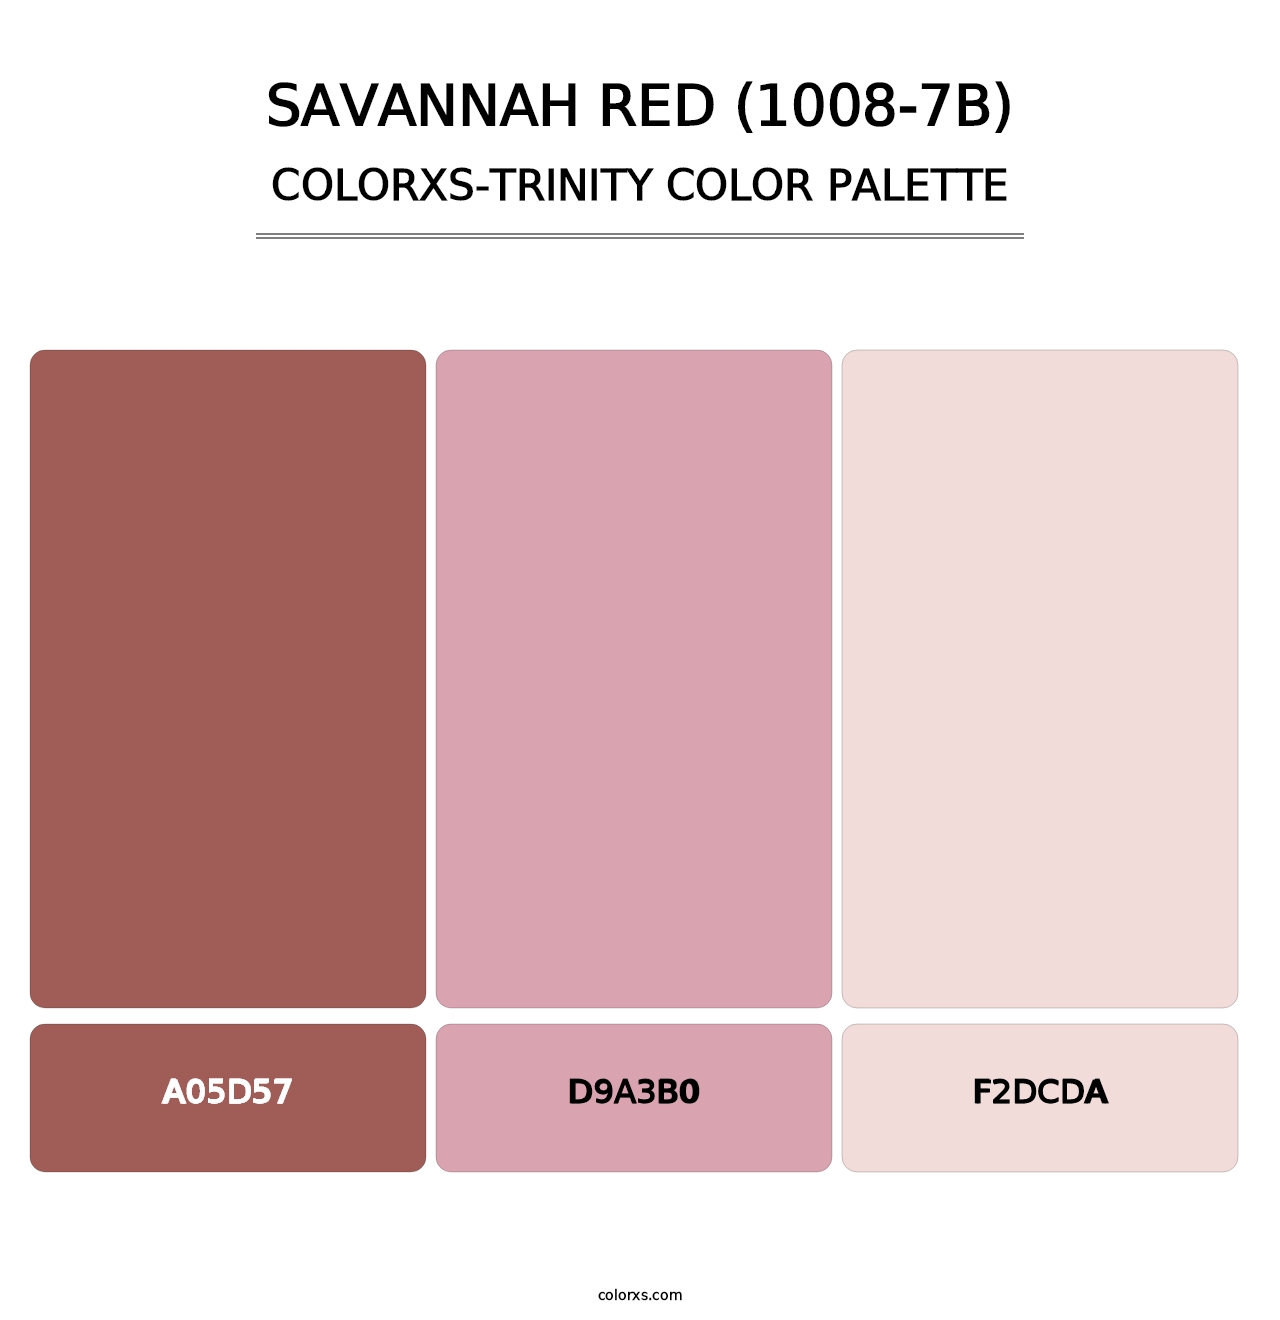 Savannah Red (1008-7B) - Colorxs Trinity Palette